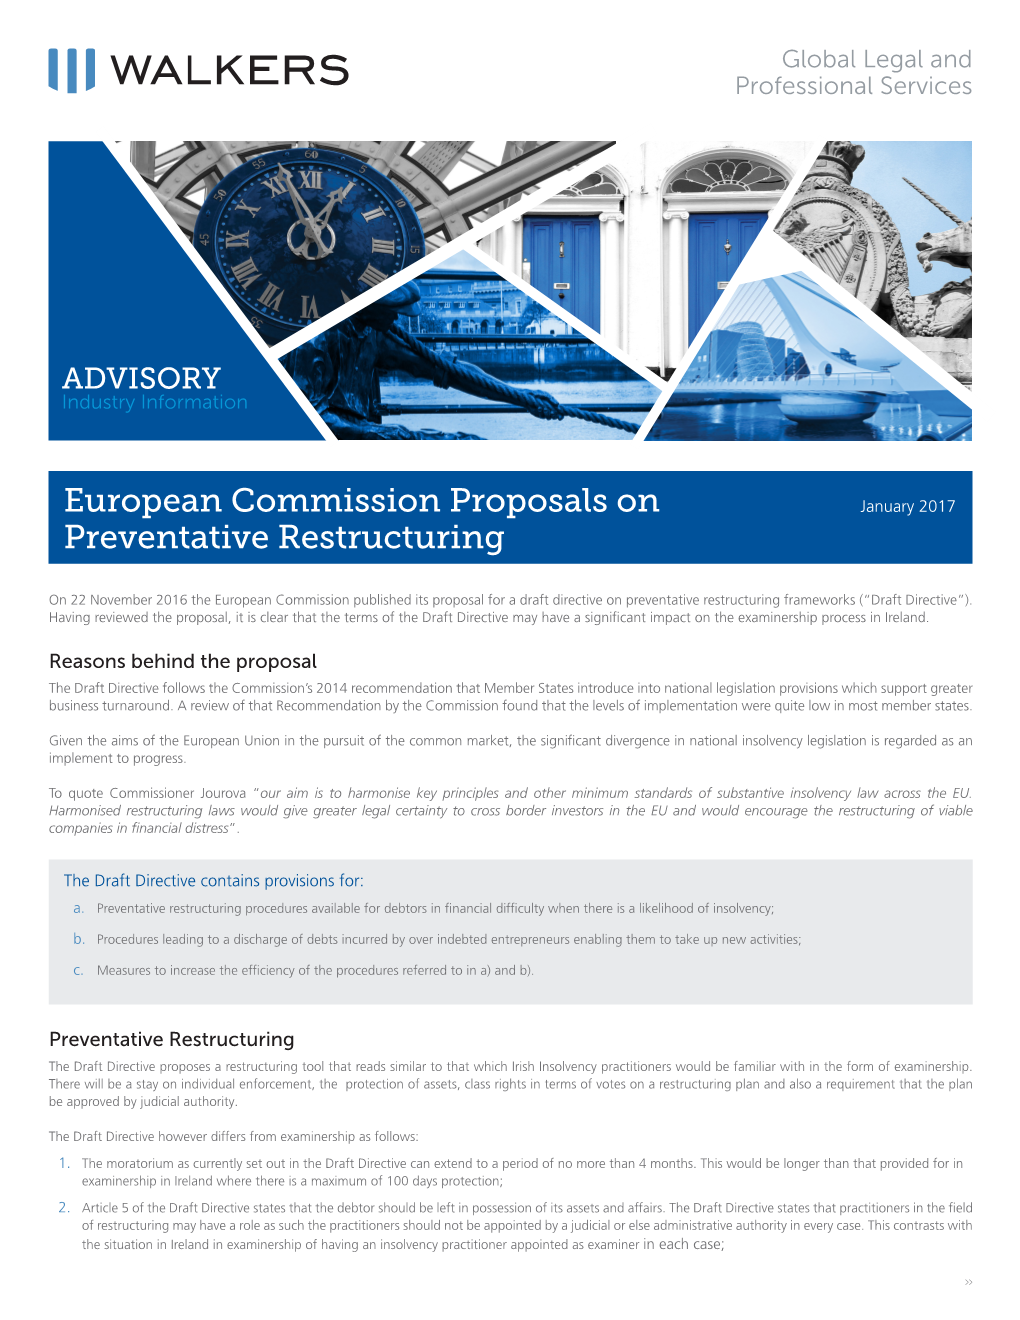 European Commission Proposals on Preventative Restructuring